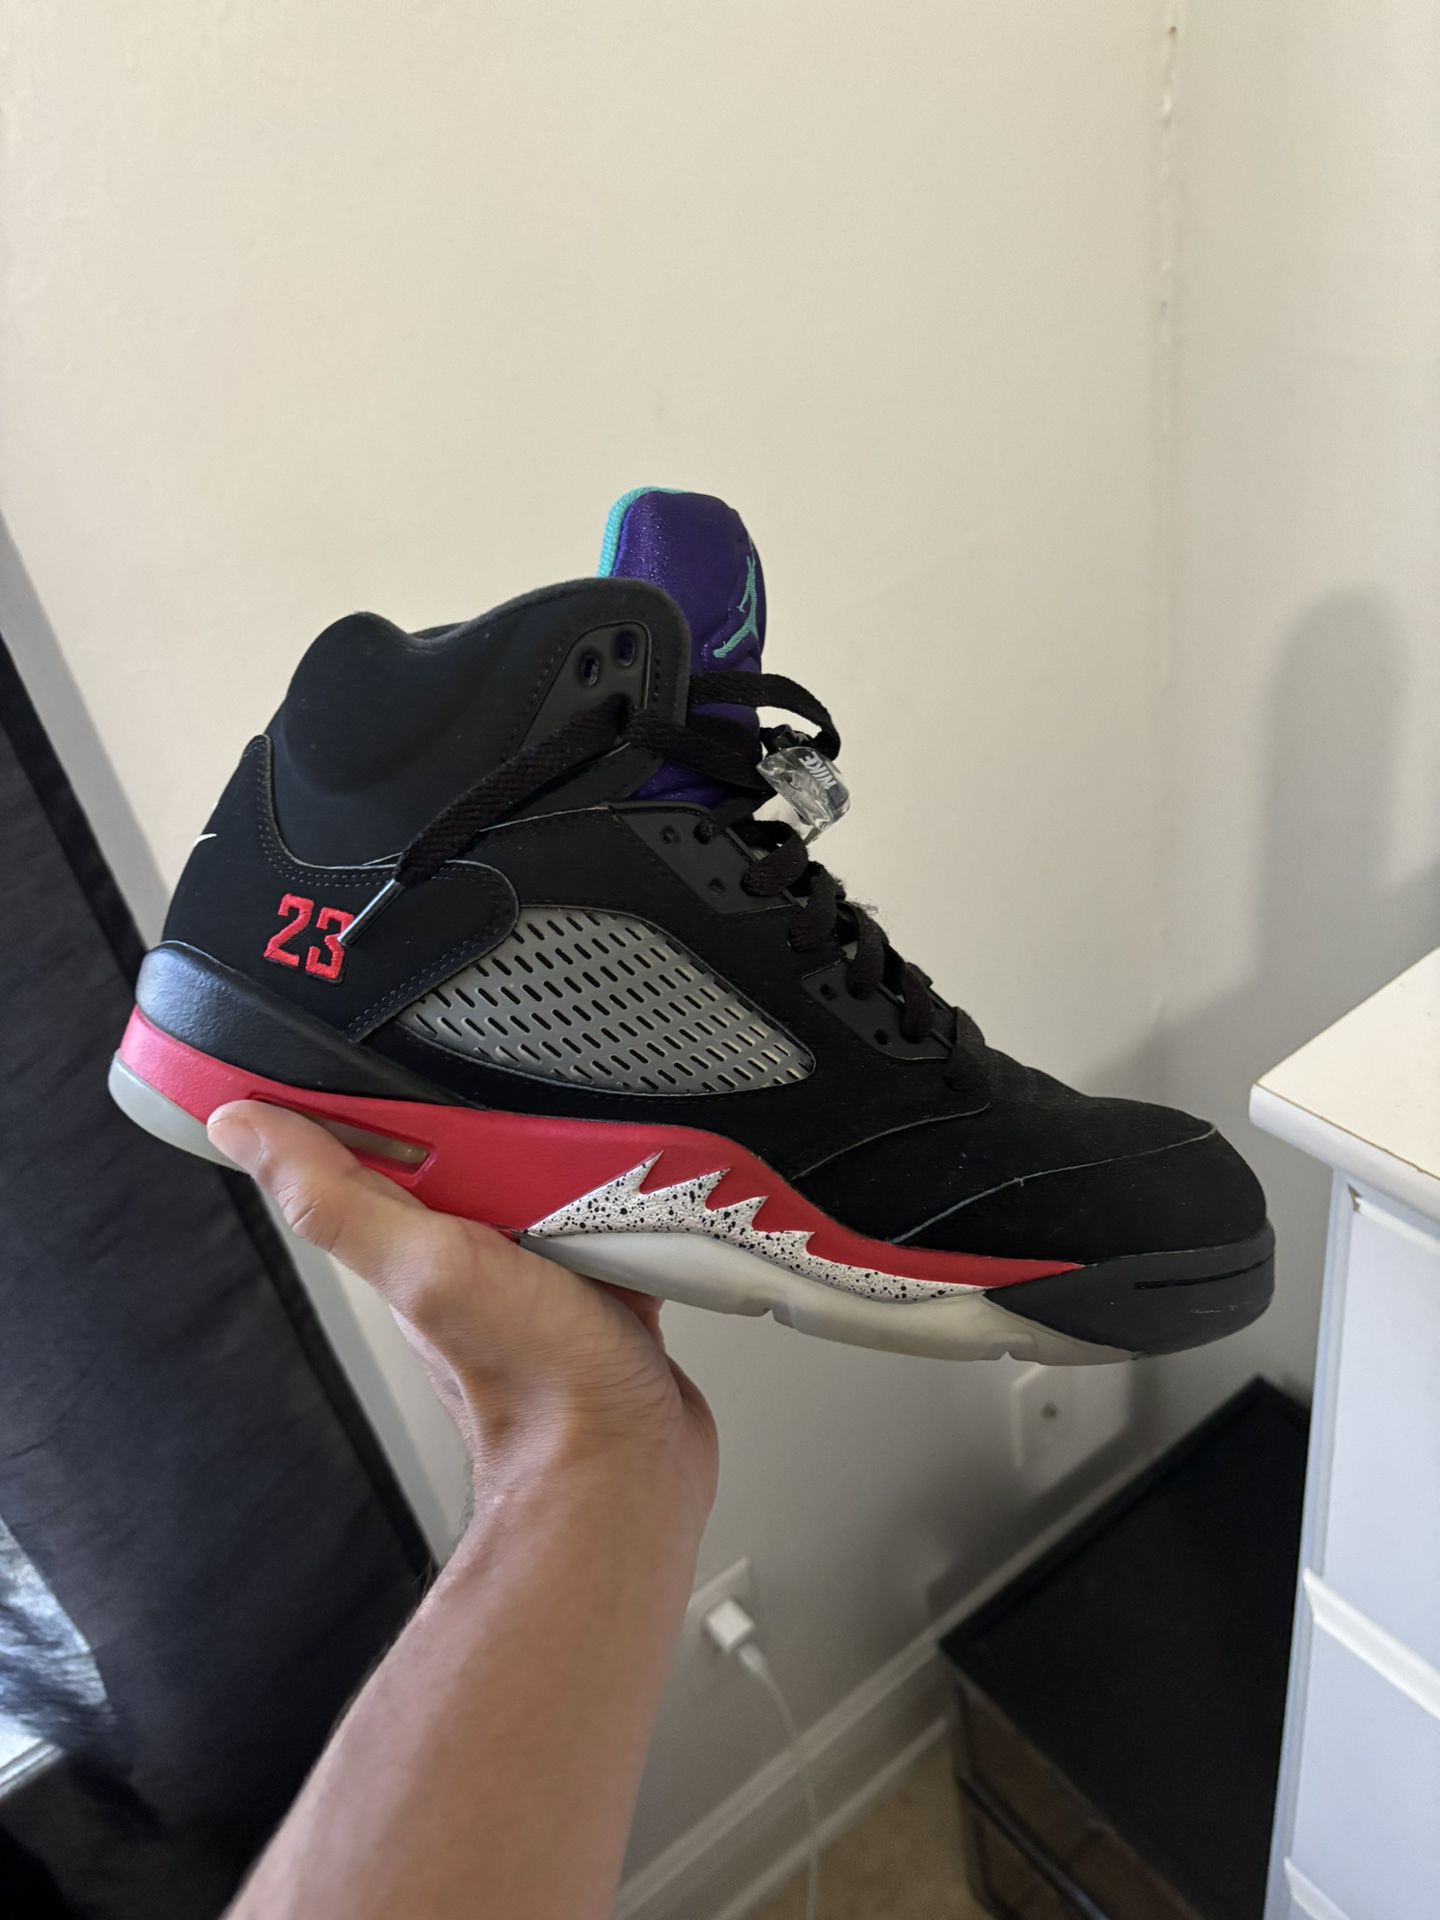 Jordan Retro 5 Size 9 Used No Box